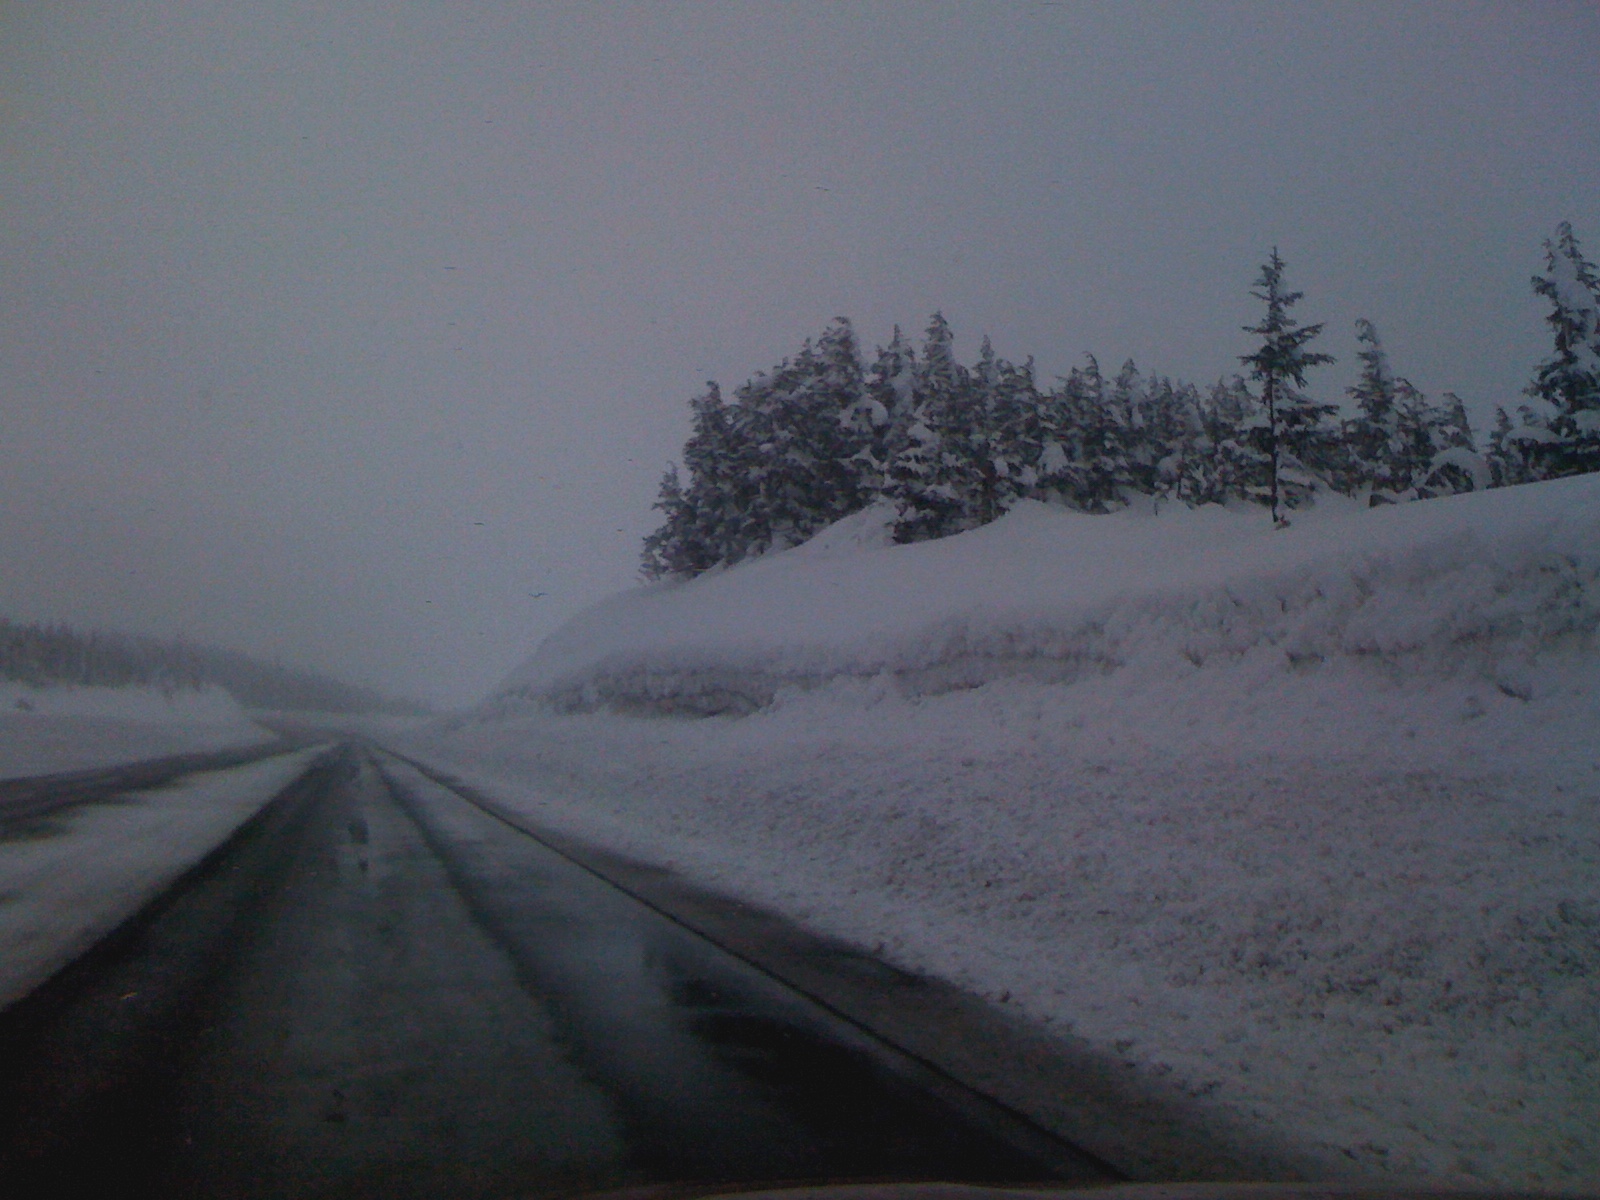 Lots of snow on the Alaska roads.